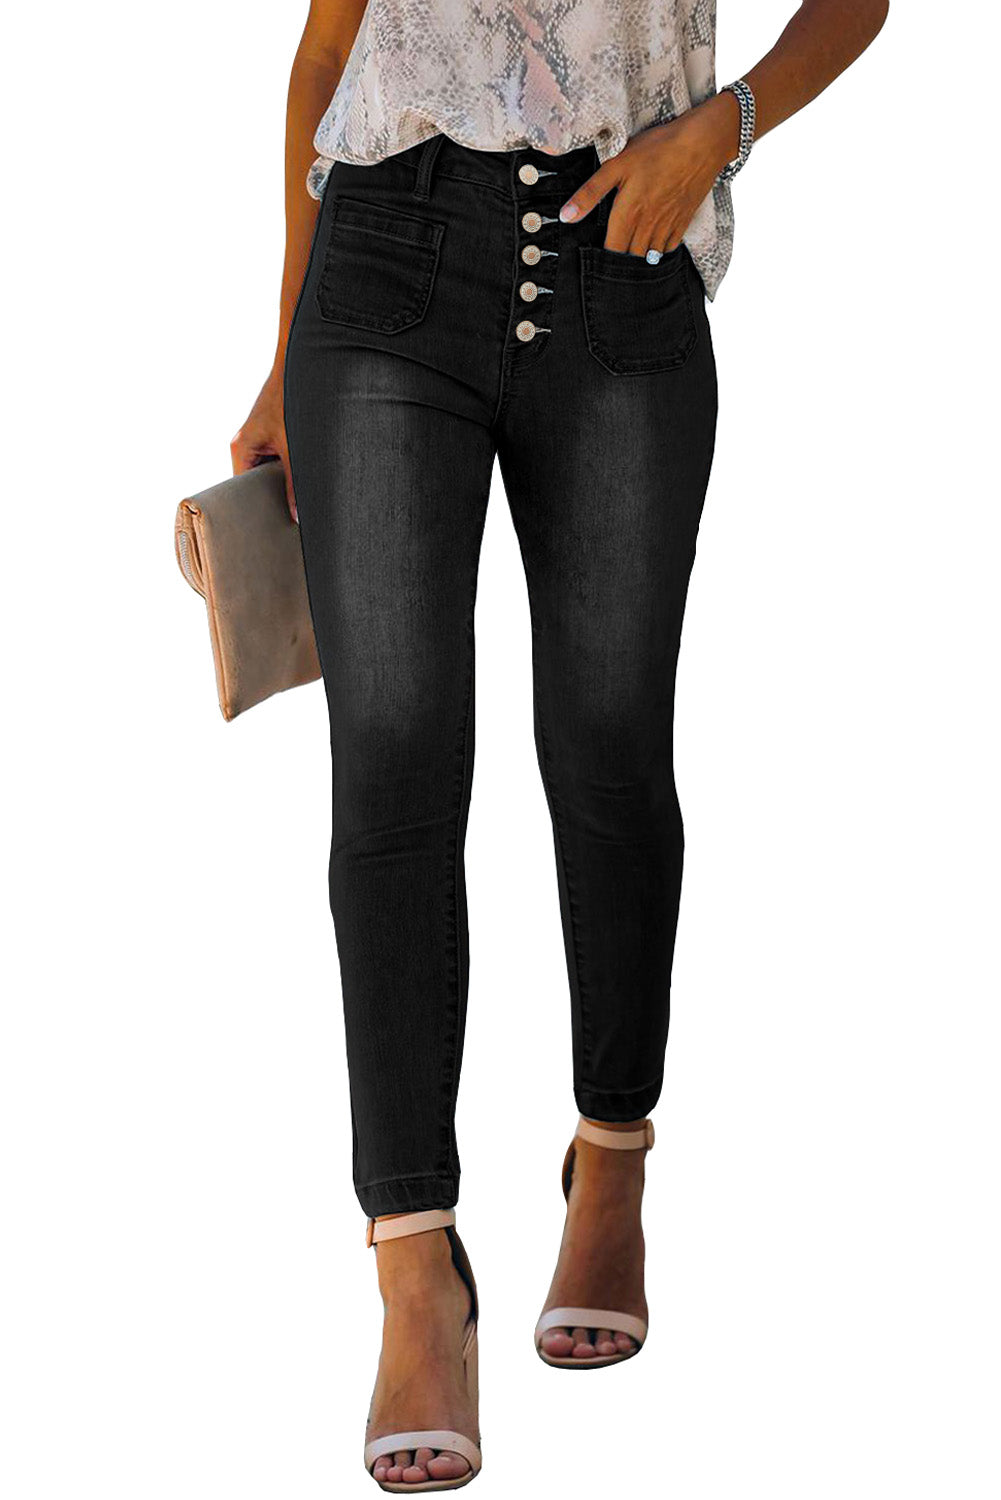 Black Button Fly Womens Skinny Jeans with Pockets - US2EInc Apparel Plug Ltd. Co